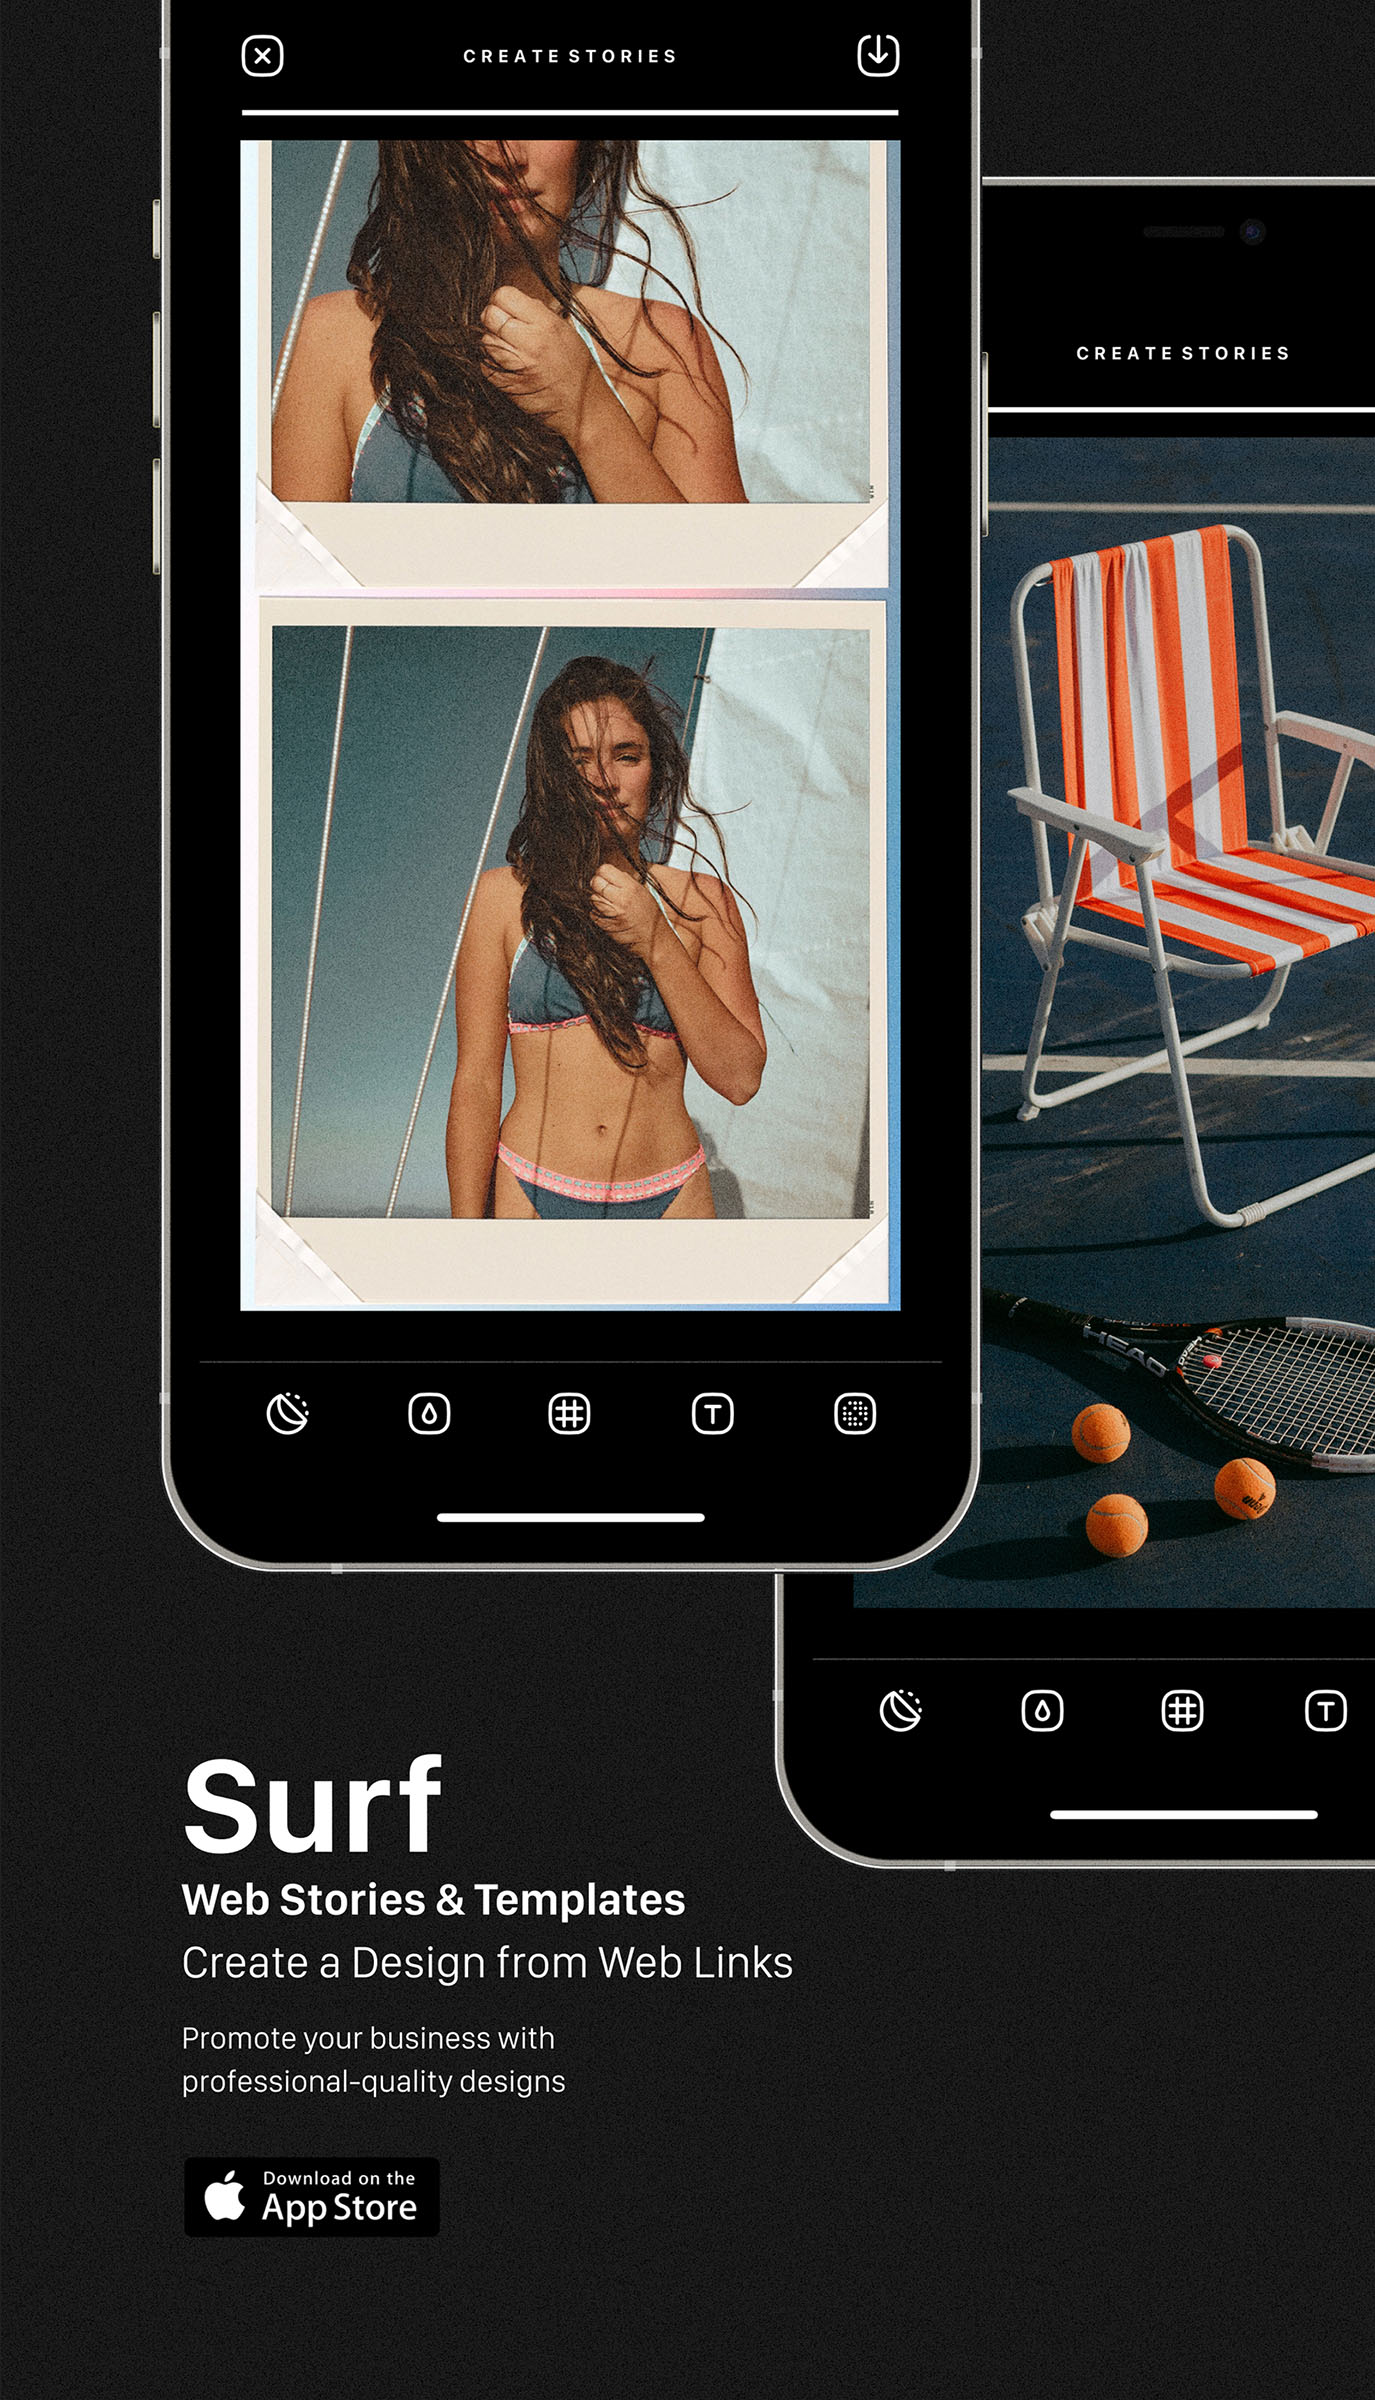 Surf: Web Stories & Templates